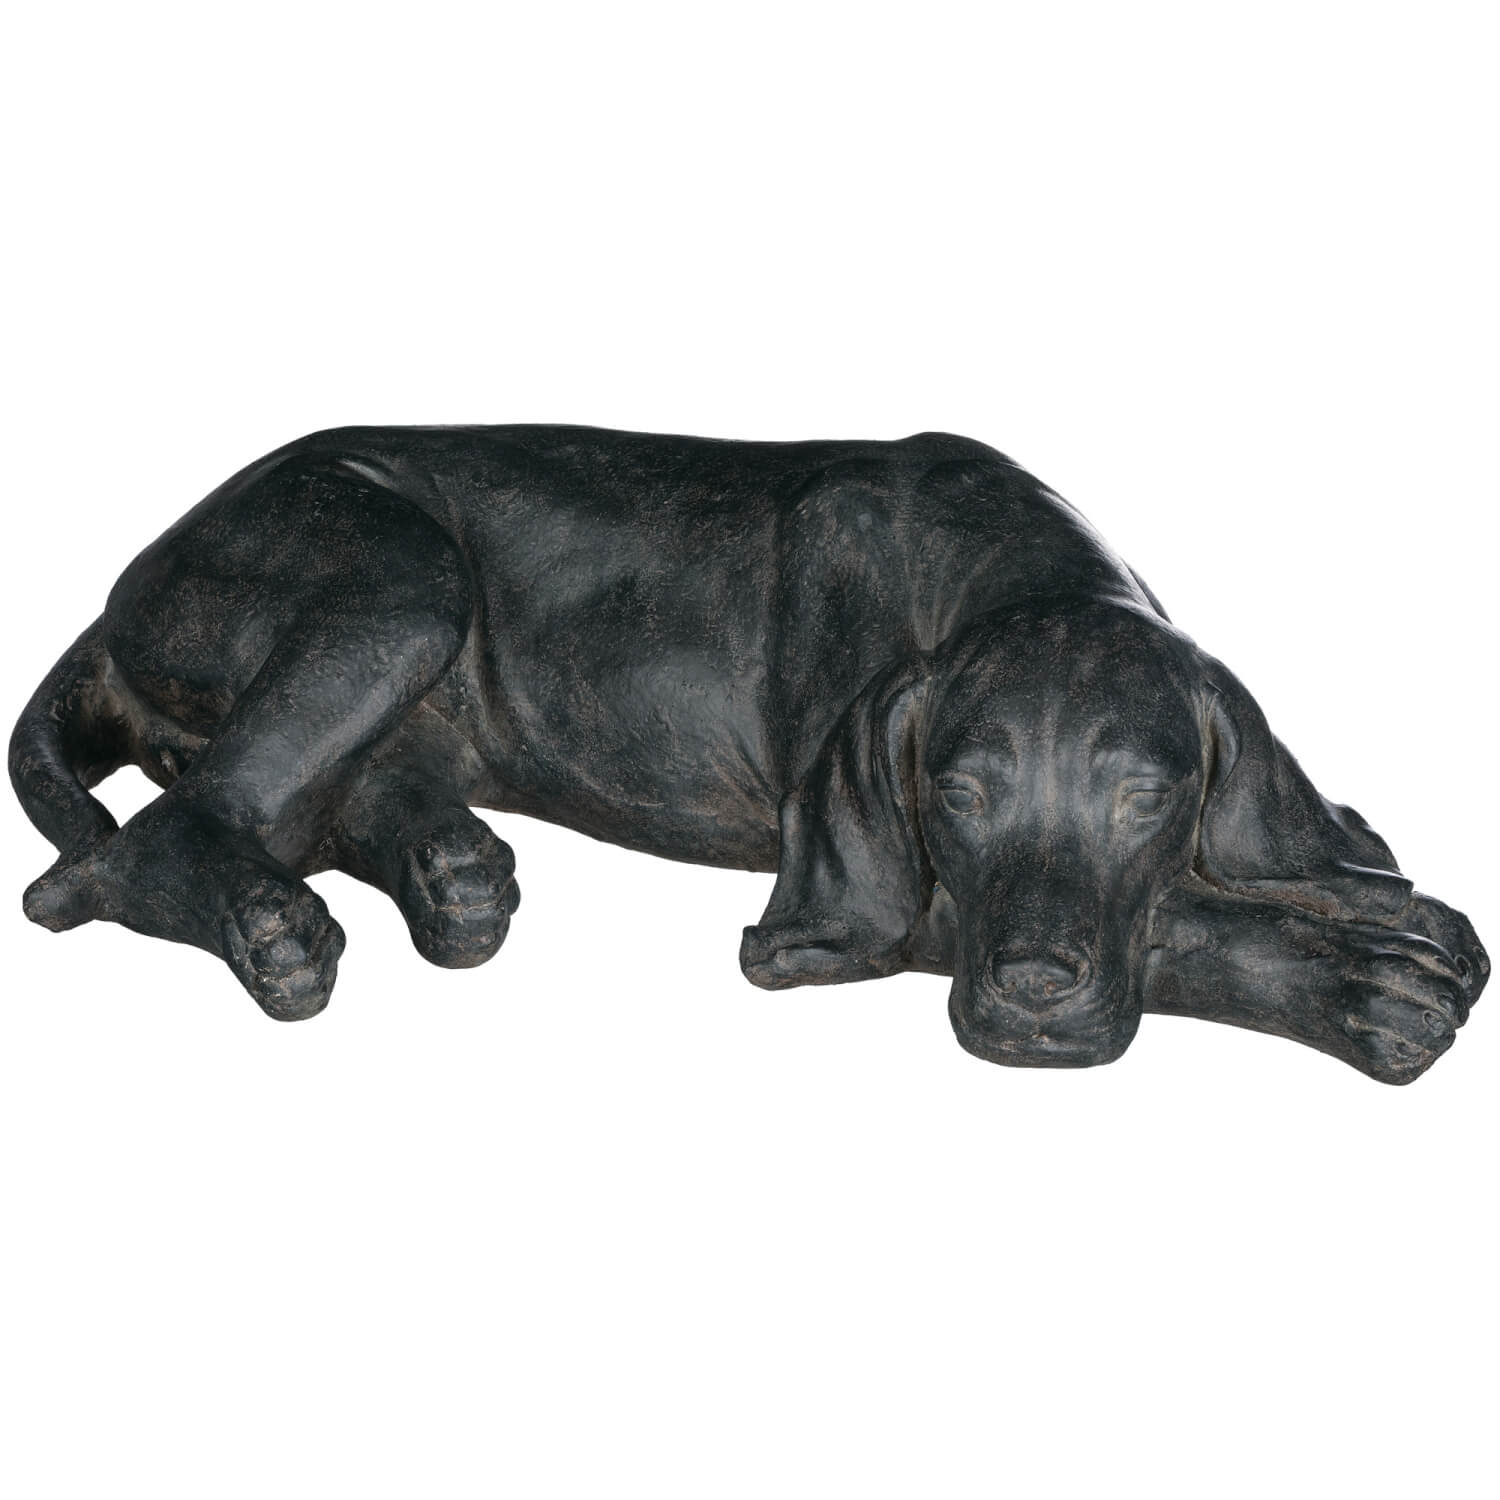 Labrador Dog Table Sculpture Elevate Home Decor - Sculptures